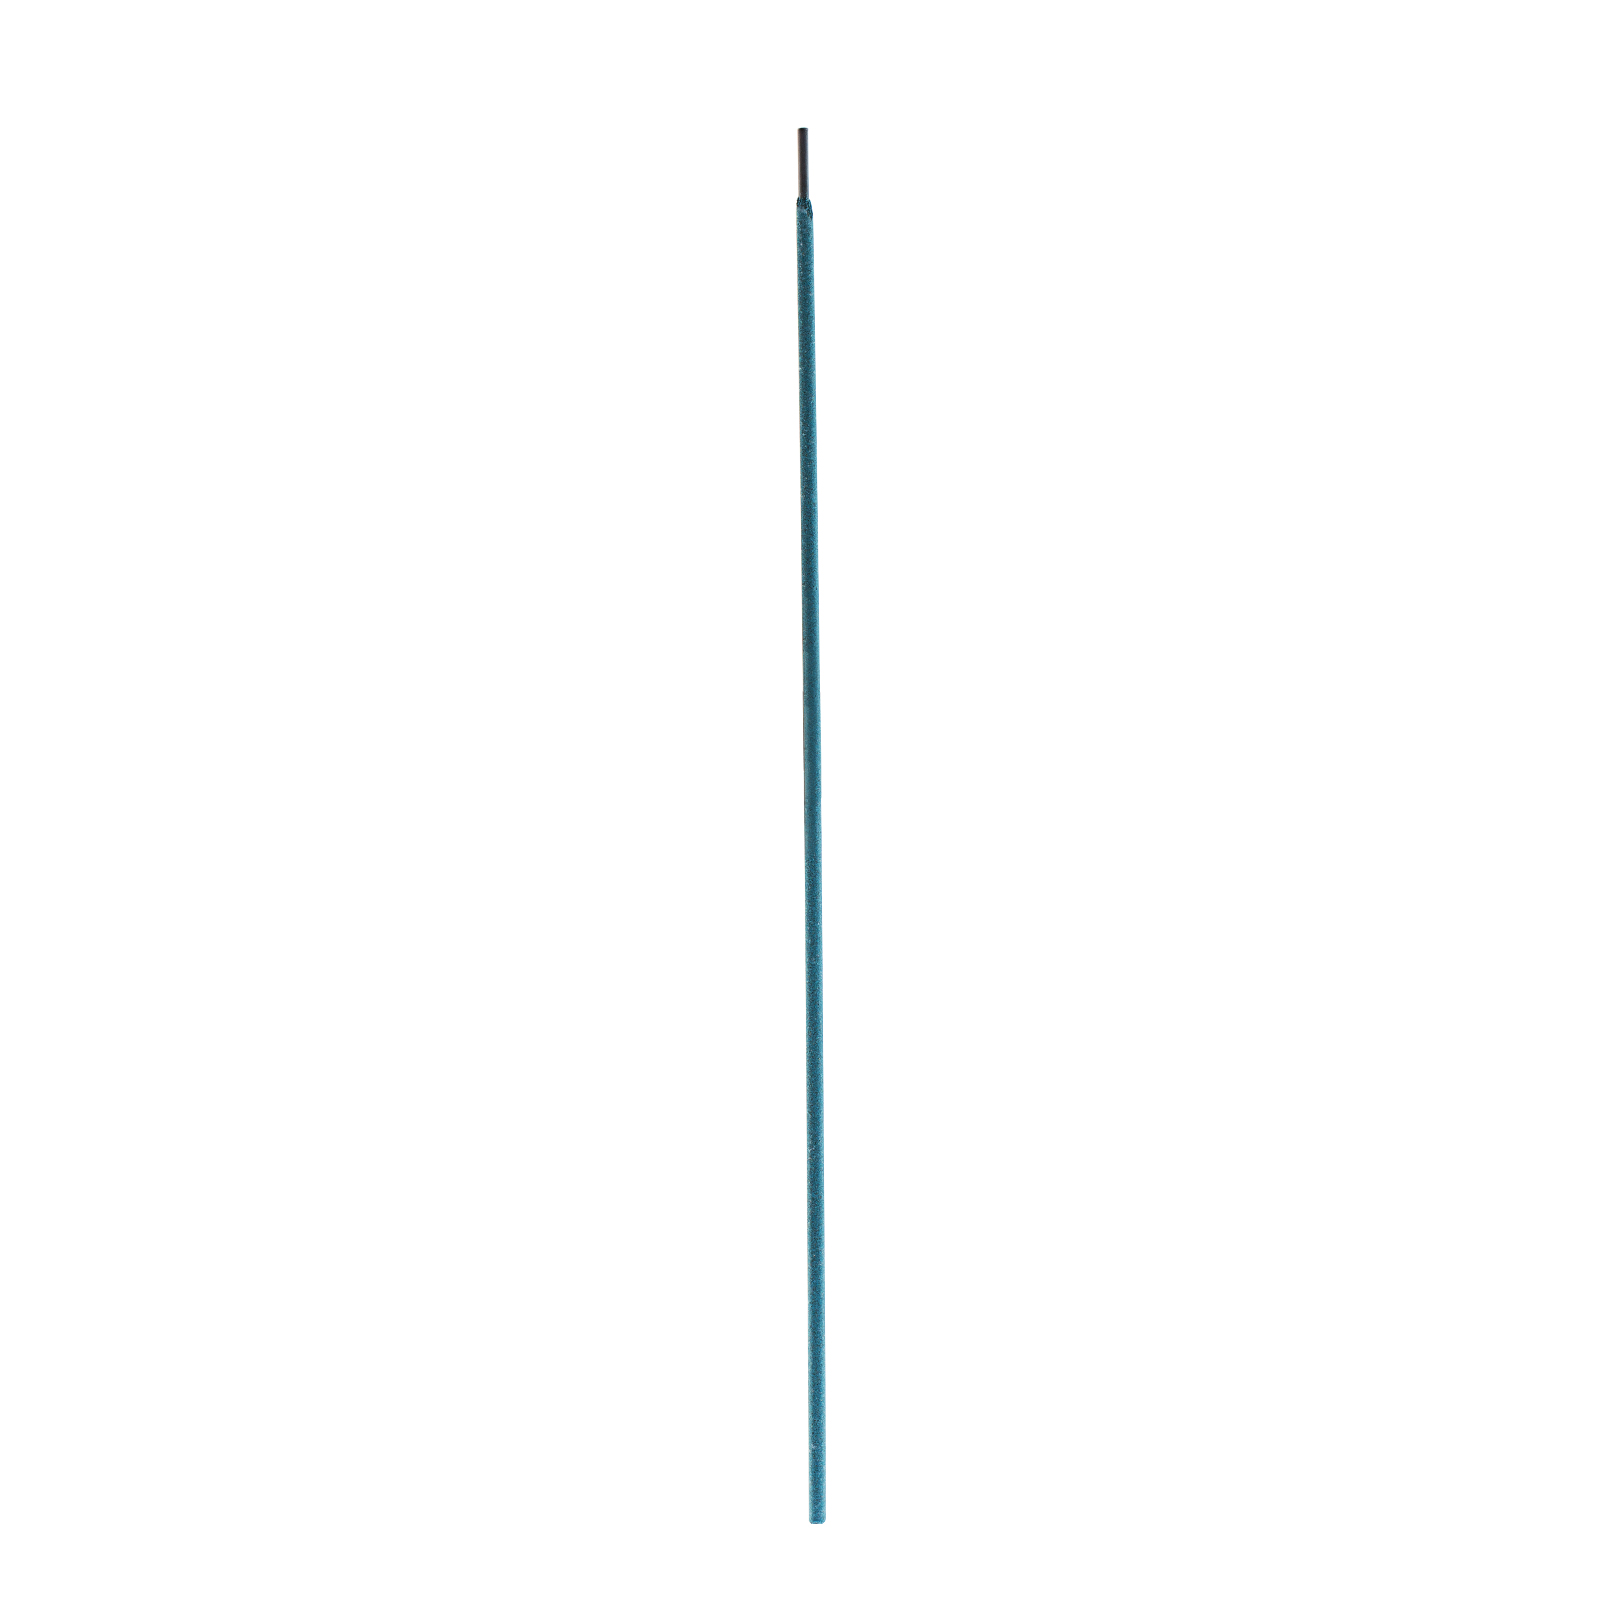 Электроды DER-3, диам. 3 мм, 5 кг, рутиловое покрытие// Denzel